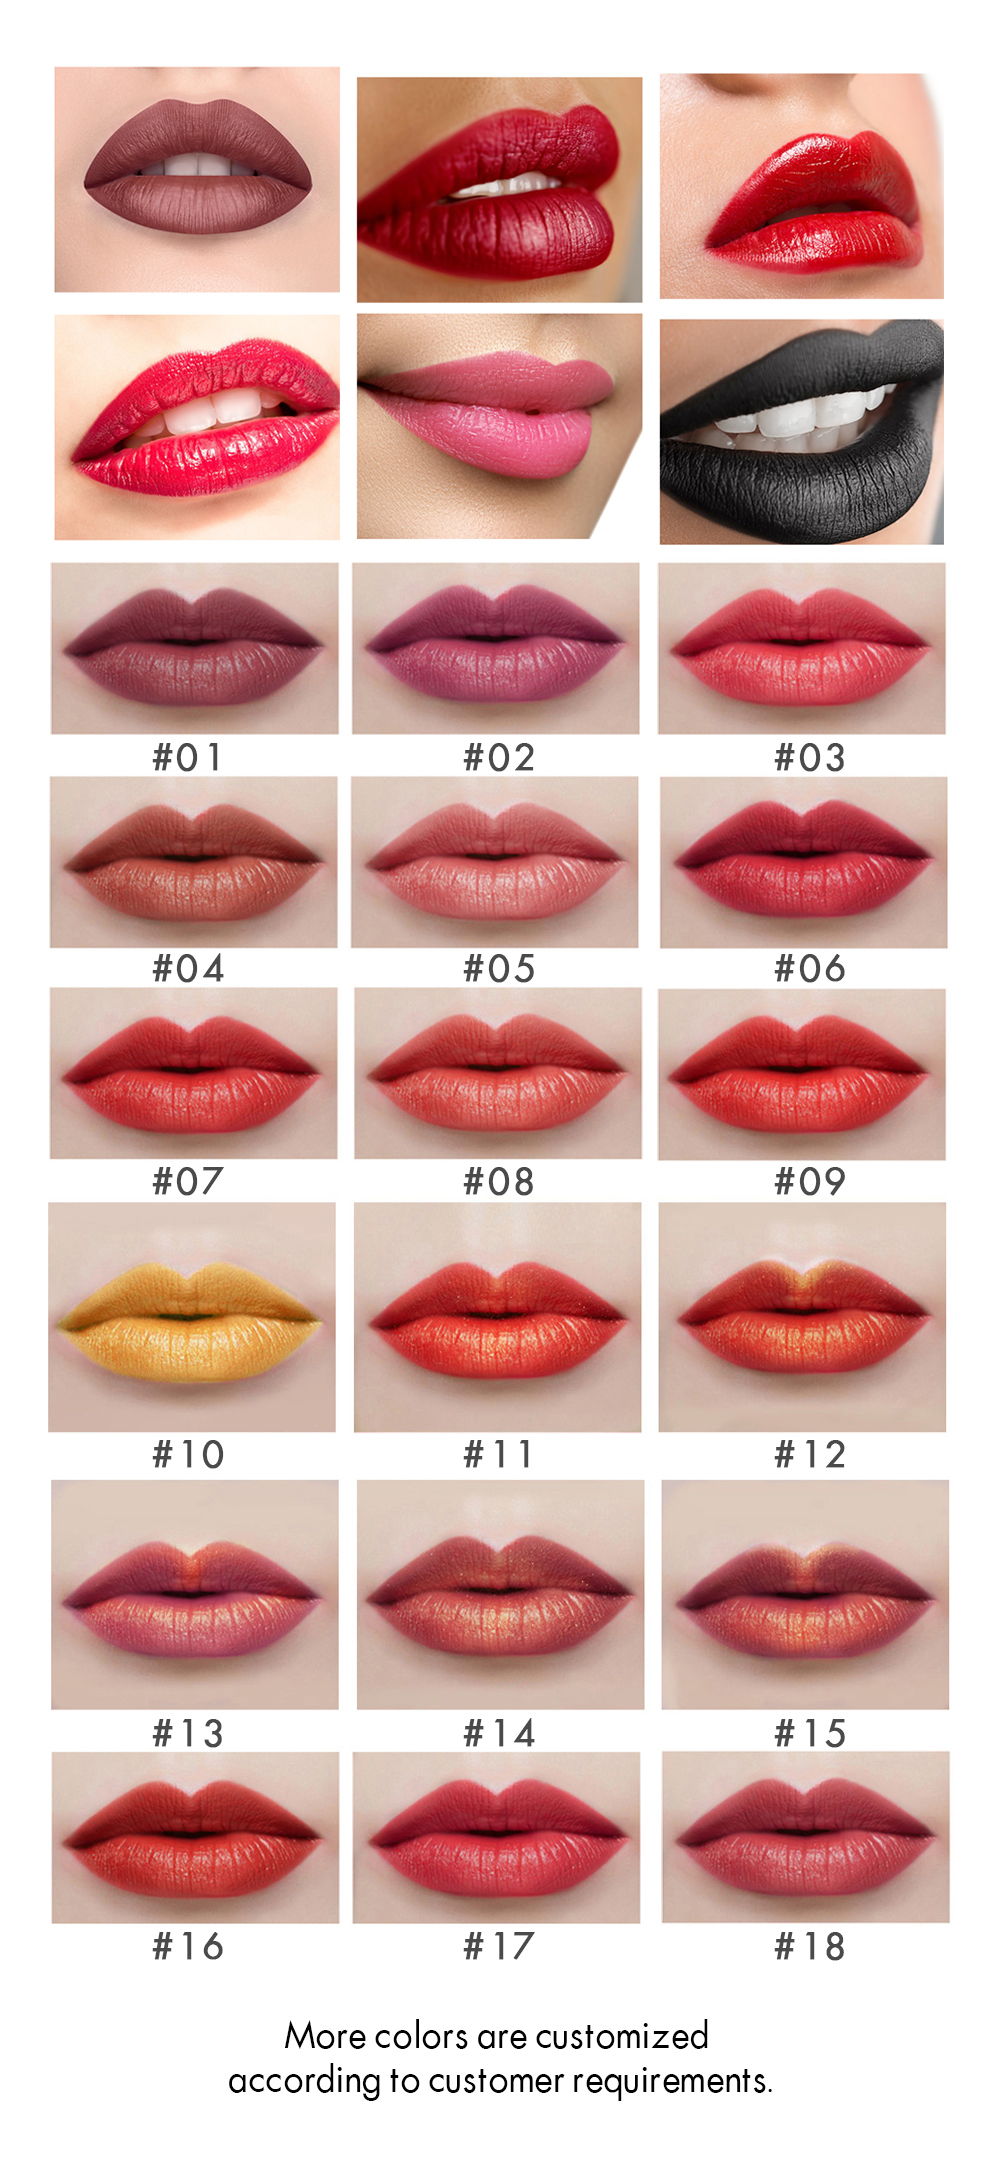 3. Carved lipstick color card